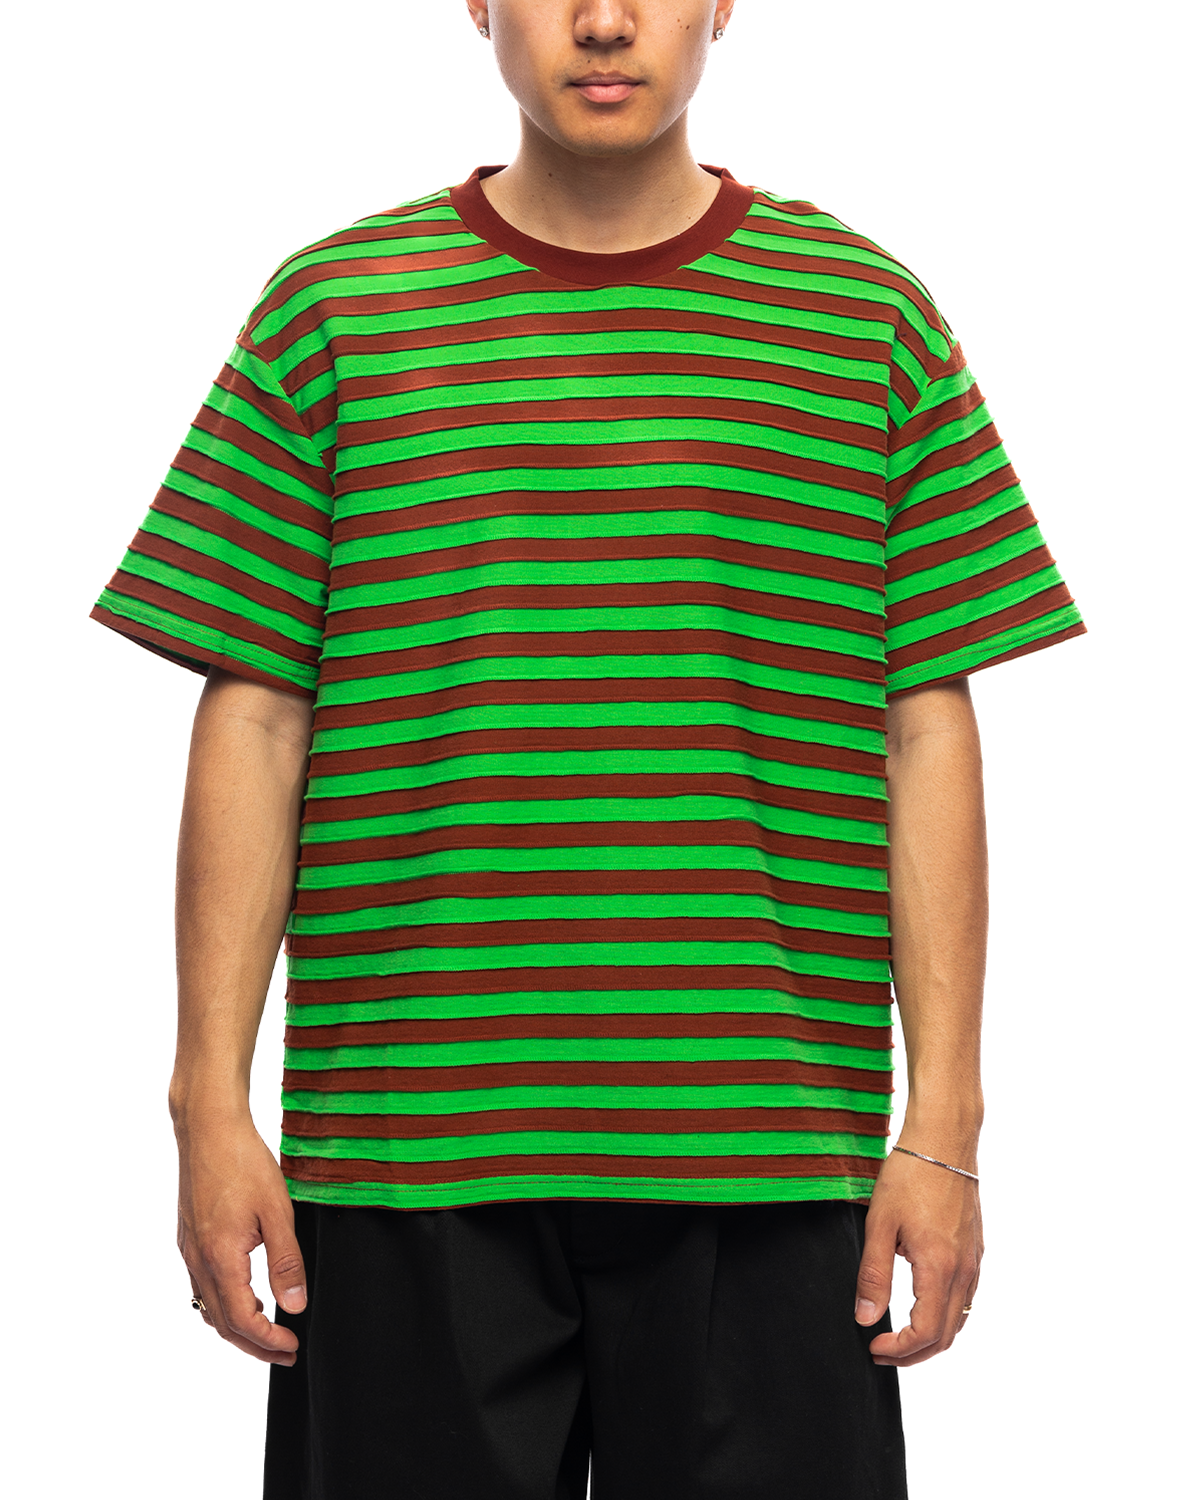 Denny Blaine Striped T-shirt Apple/Caramel